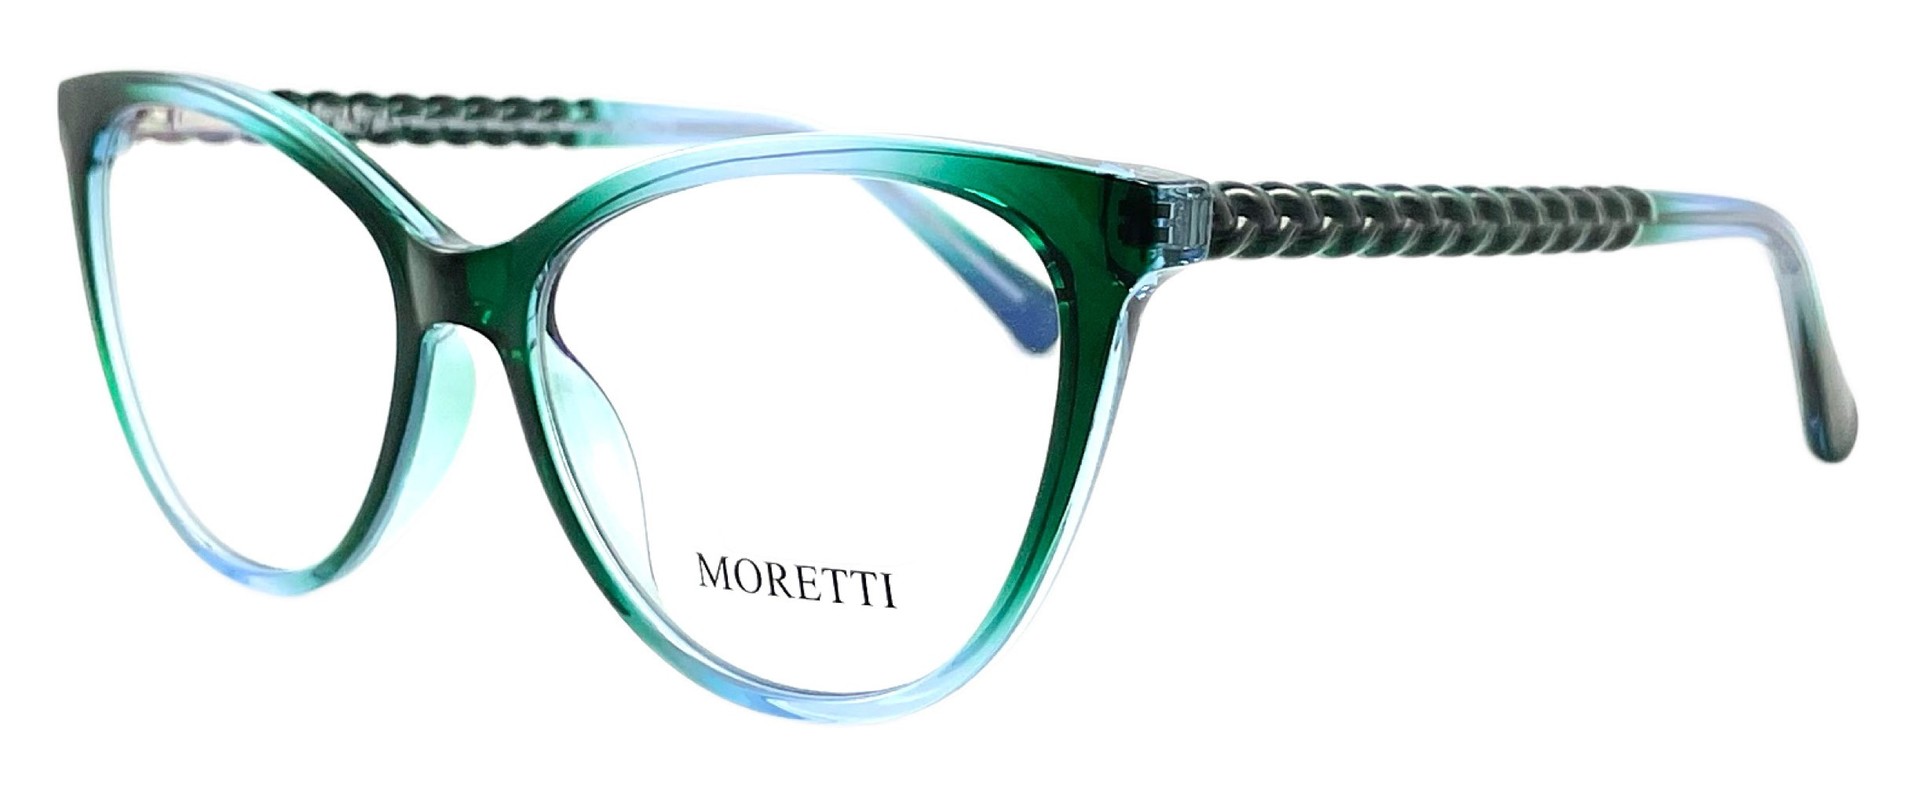 Moretti 2136 C6 2